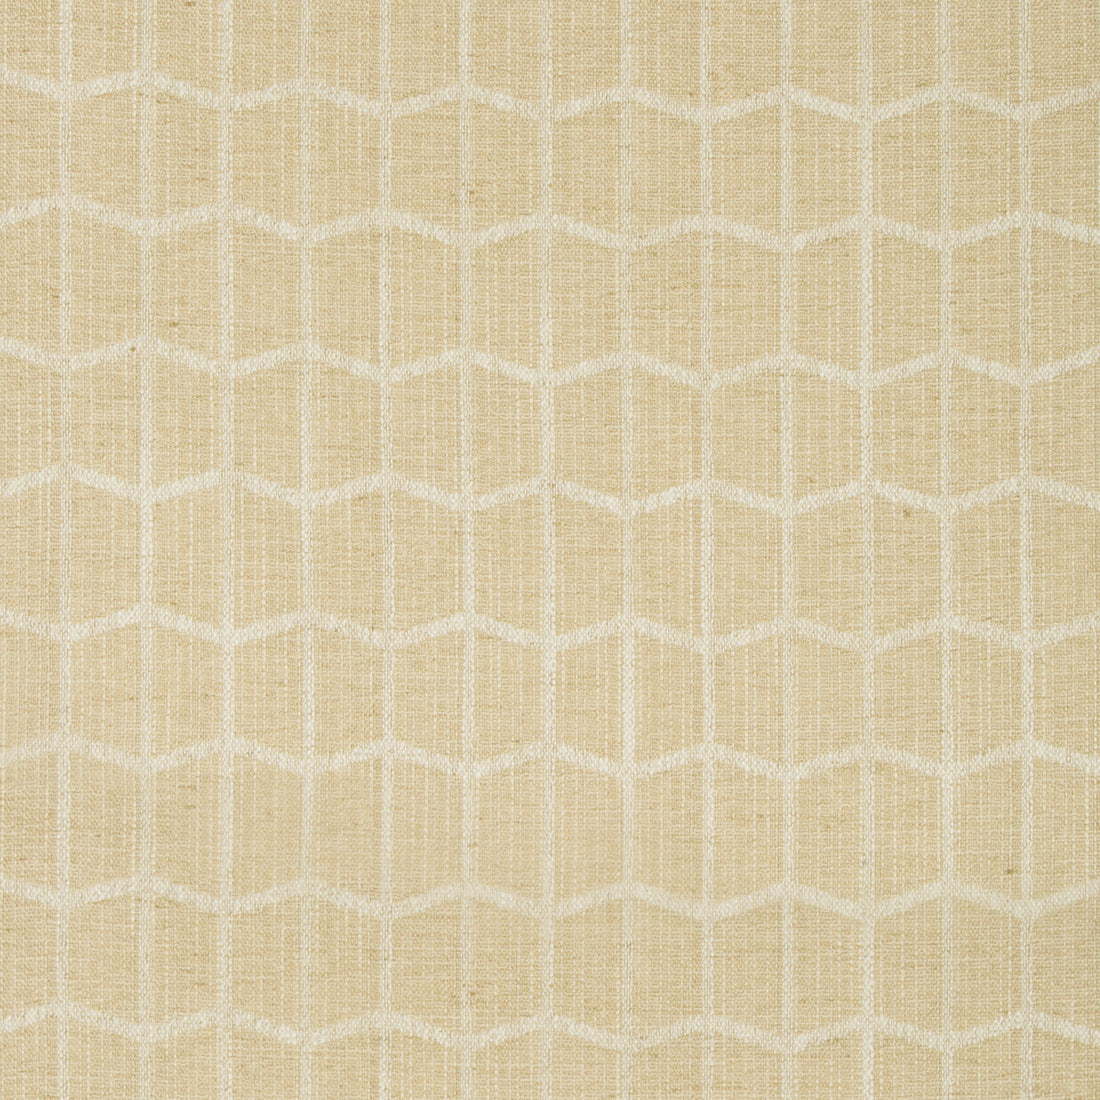 Kravet Smart fabric in 35332-16 color - pattern 35332.16.0 - by Kravet Smart in the Performance Kravetarmor collection